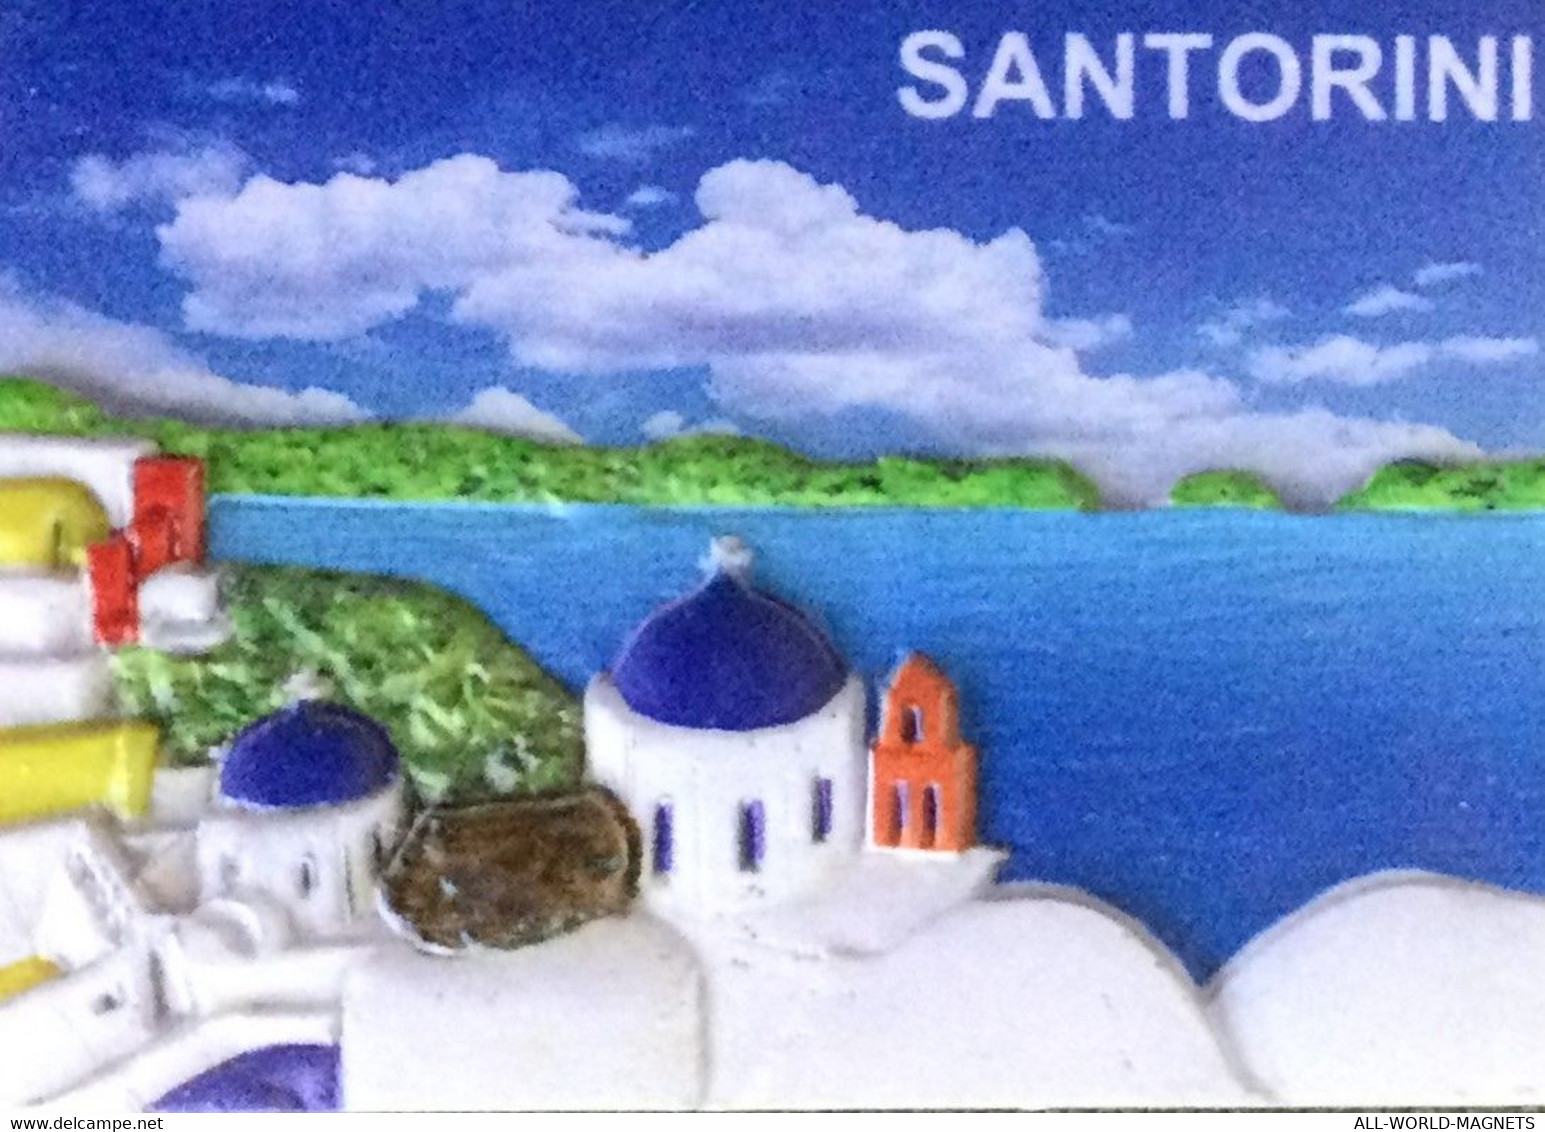 Thera Santorini Island View Fridge Magnet Souvenir, Greece - Magnets